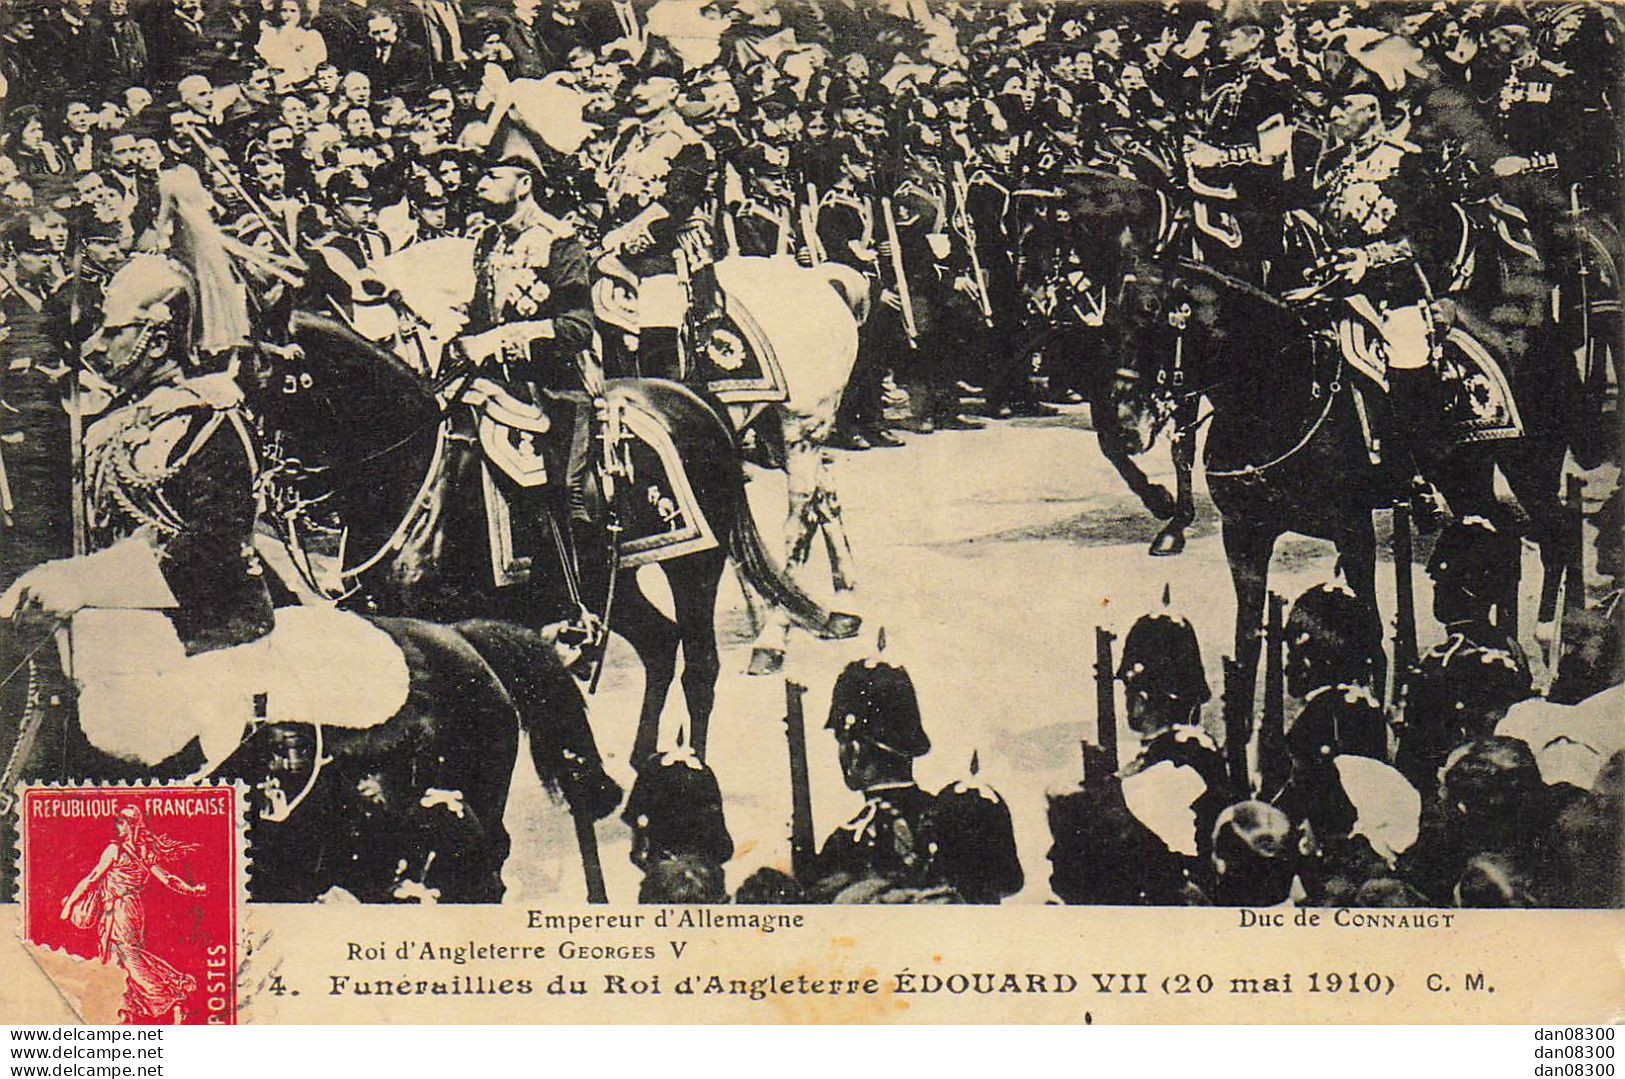 FUNERAILLES DU ROI D'ANGLETERRE EDOUARD VII 20 MAI 1910 EMPEREUR D'ALLEMAGNE ROI D"ANGLETERRE GEORGES V DUC DE CONNAUGT - Funeral